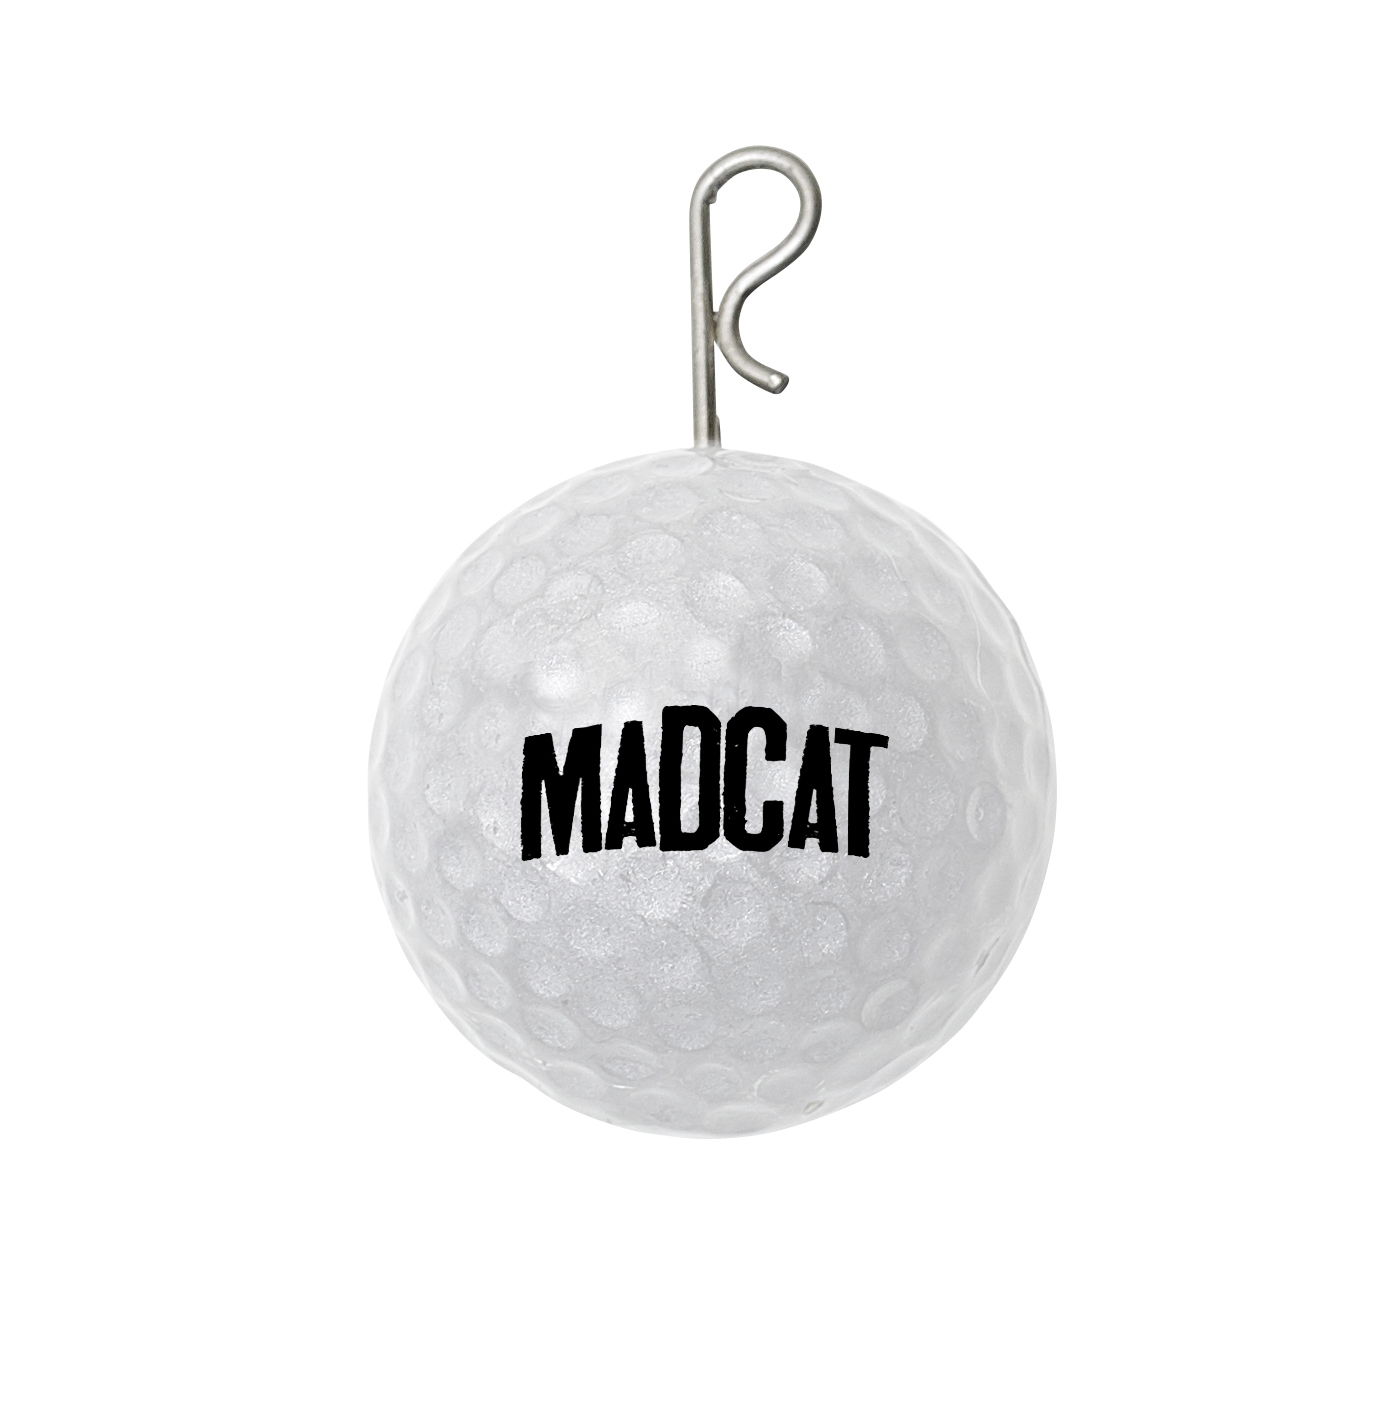 Madcat Golf Ball Snap-On Vertiball